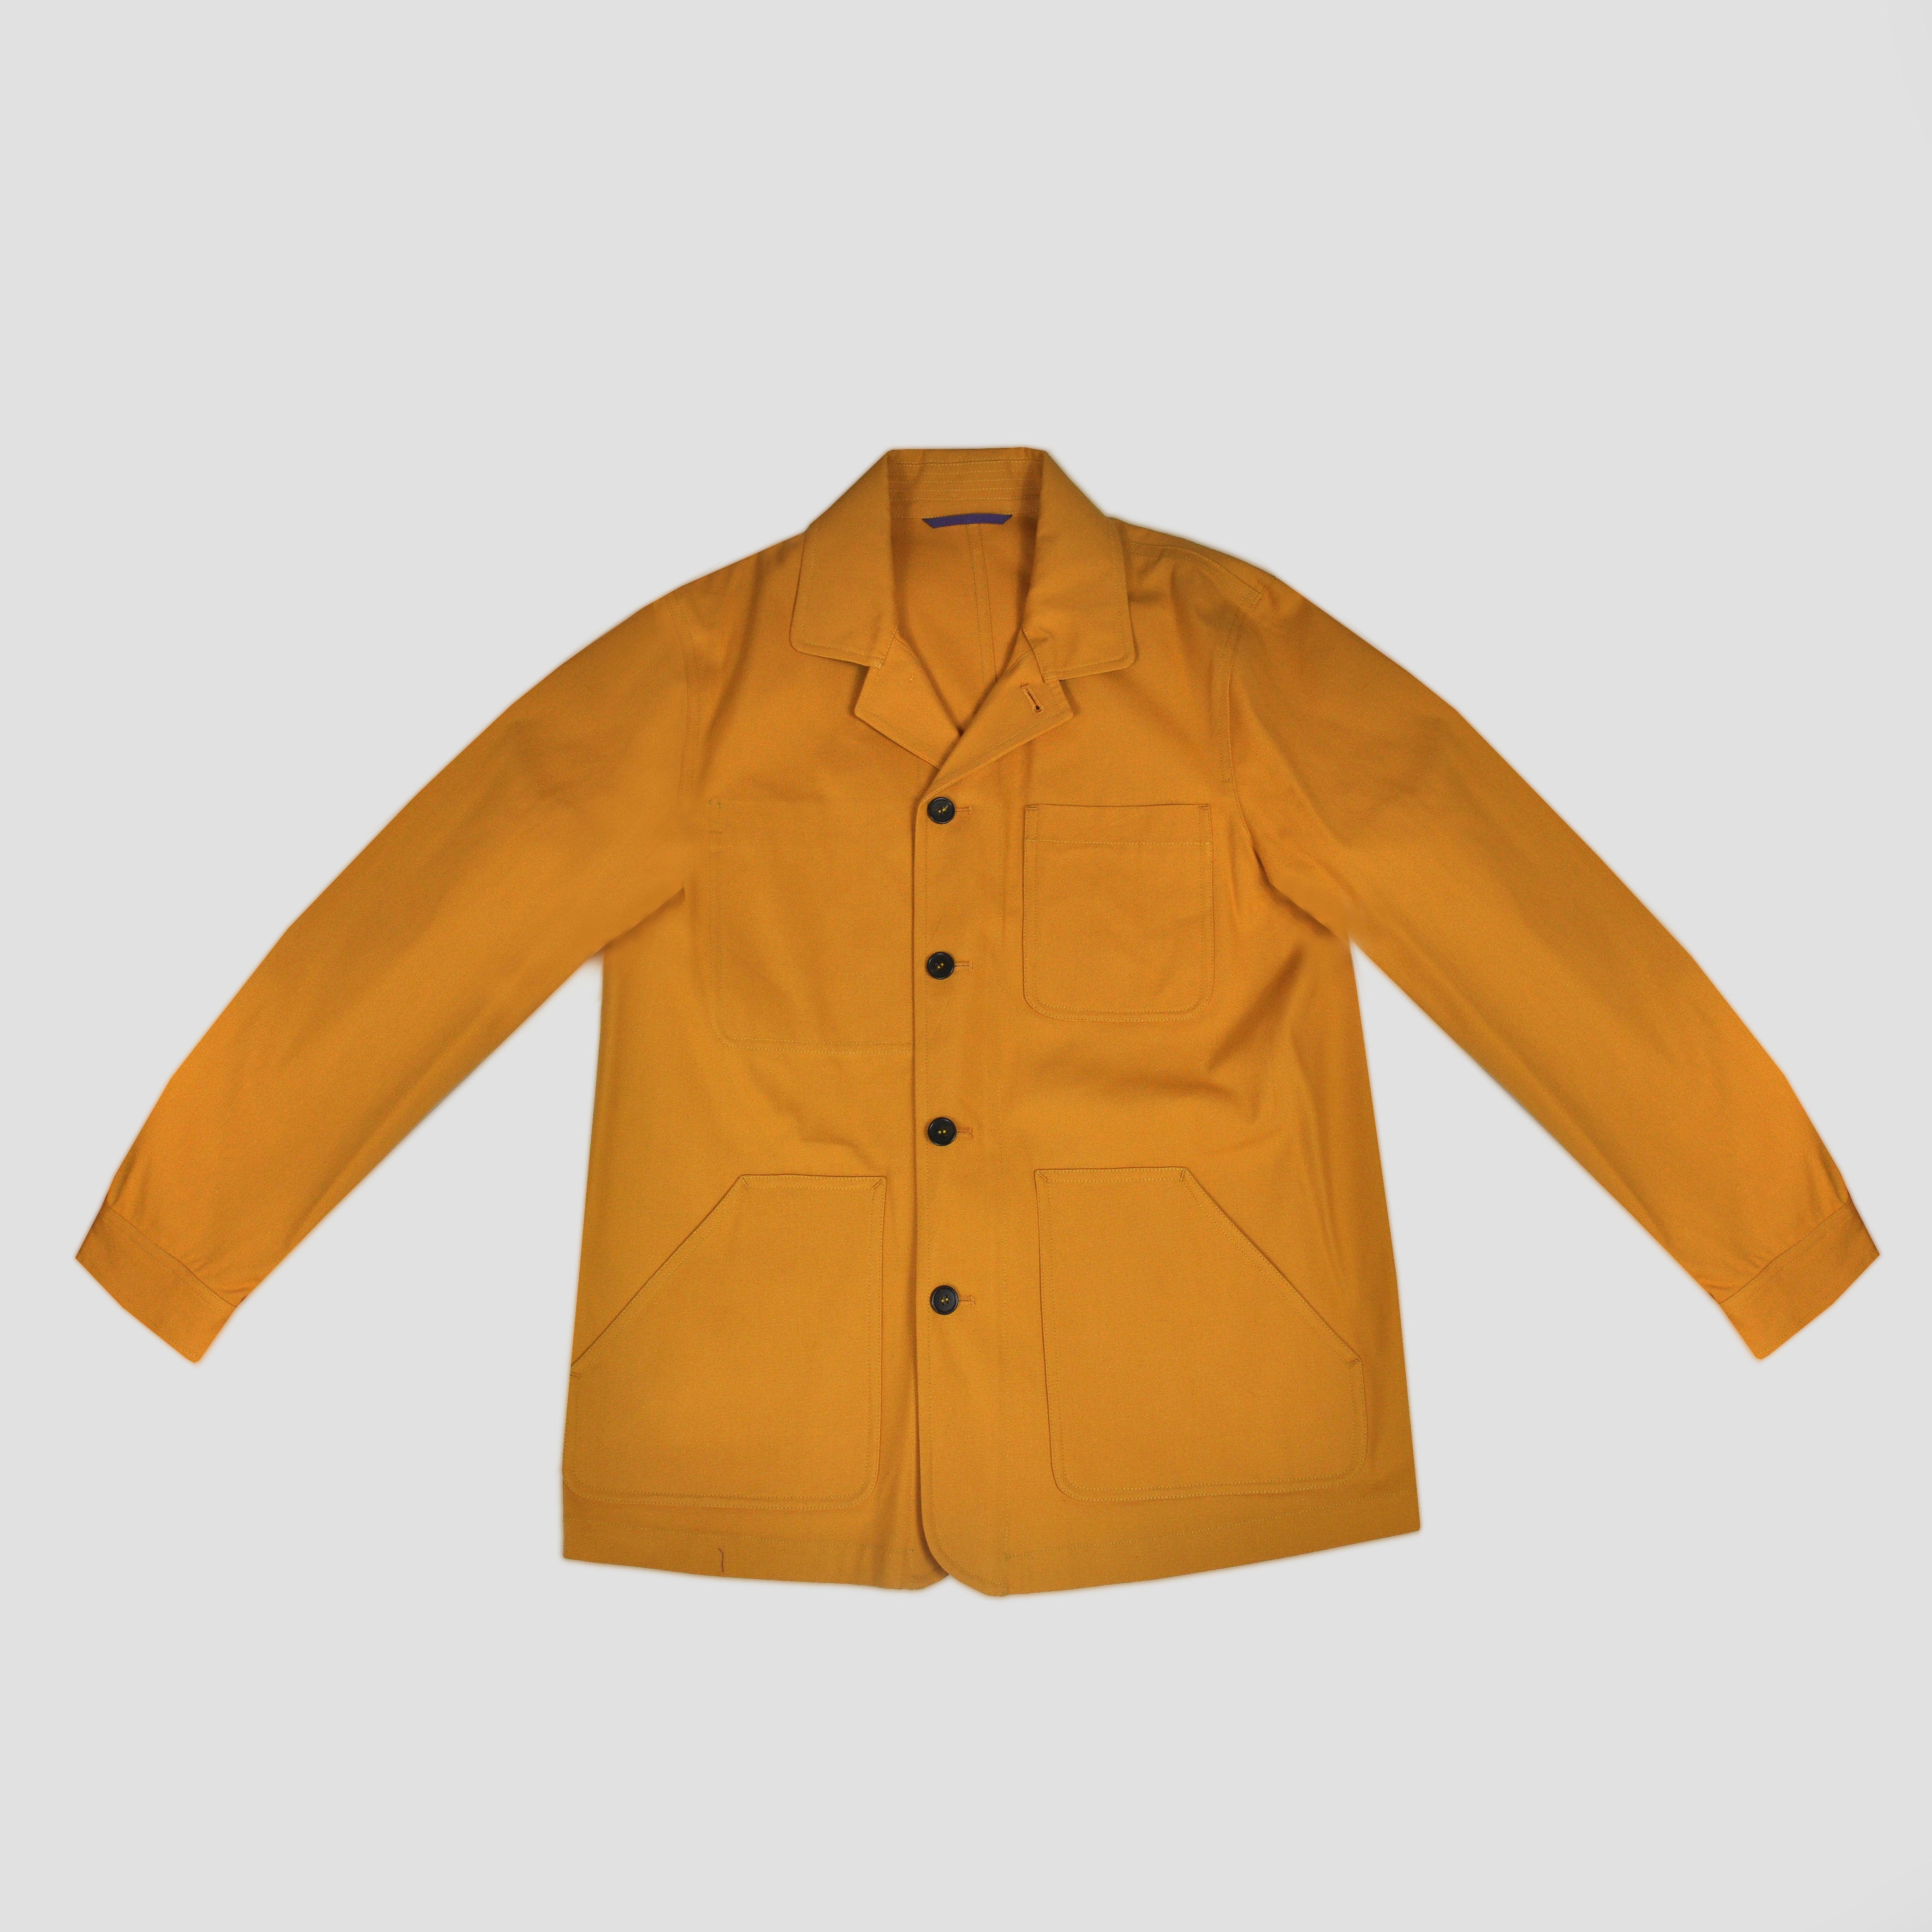 Heavy Cotton Worker Jacket in Mustard Yellow with Blue (under) Collar